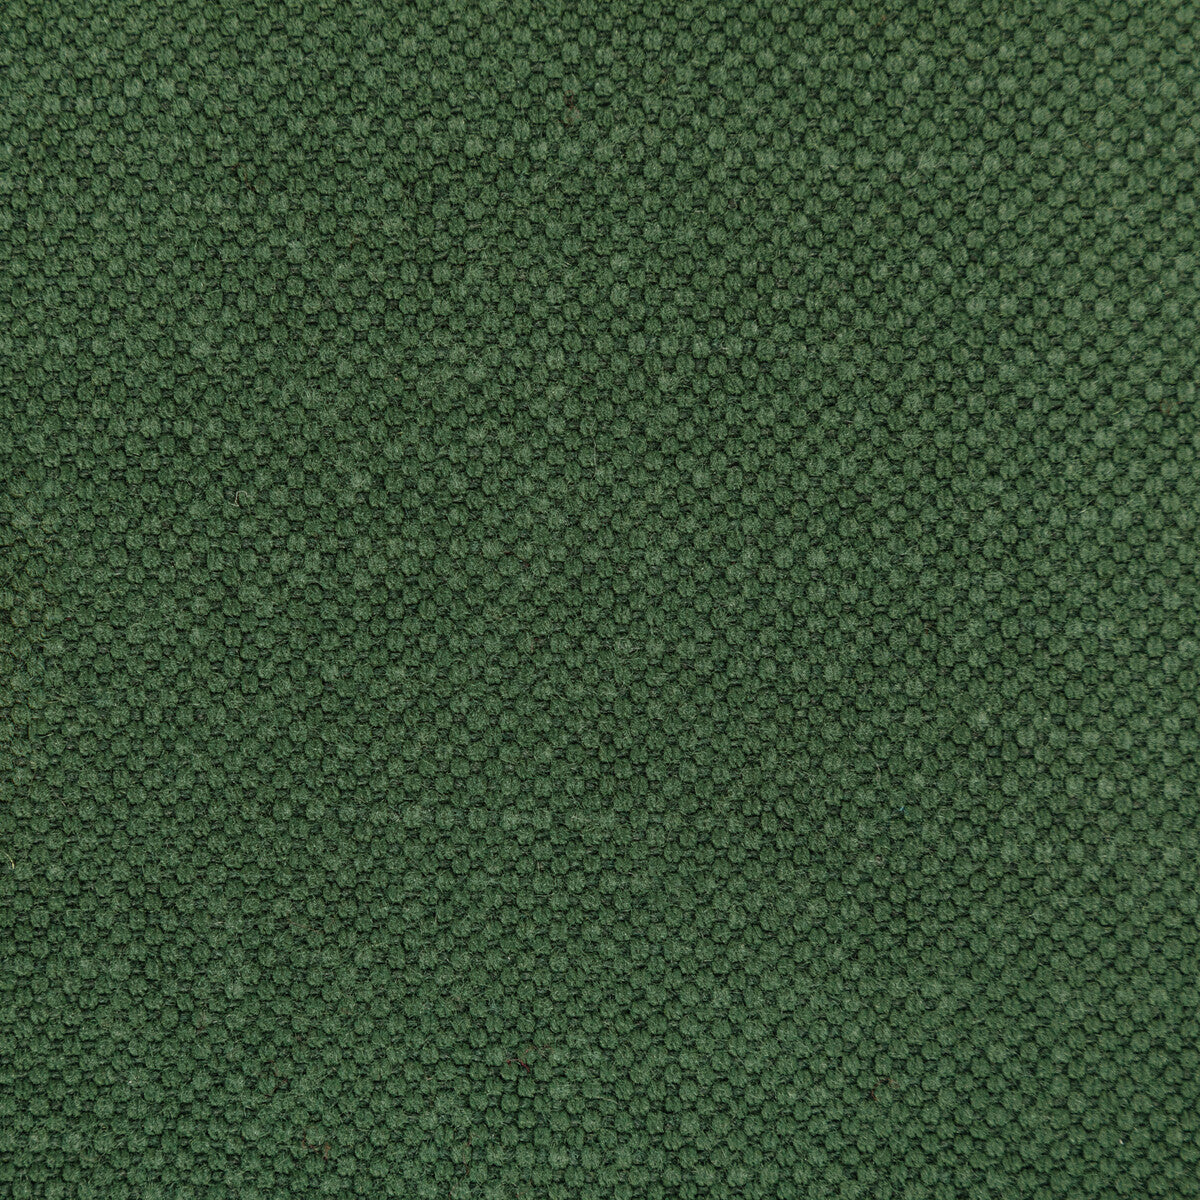 Carson fabric in envy color - pattern 36282.350.0 - by Kravet Basics